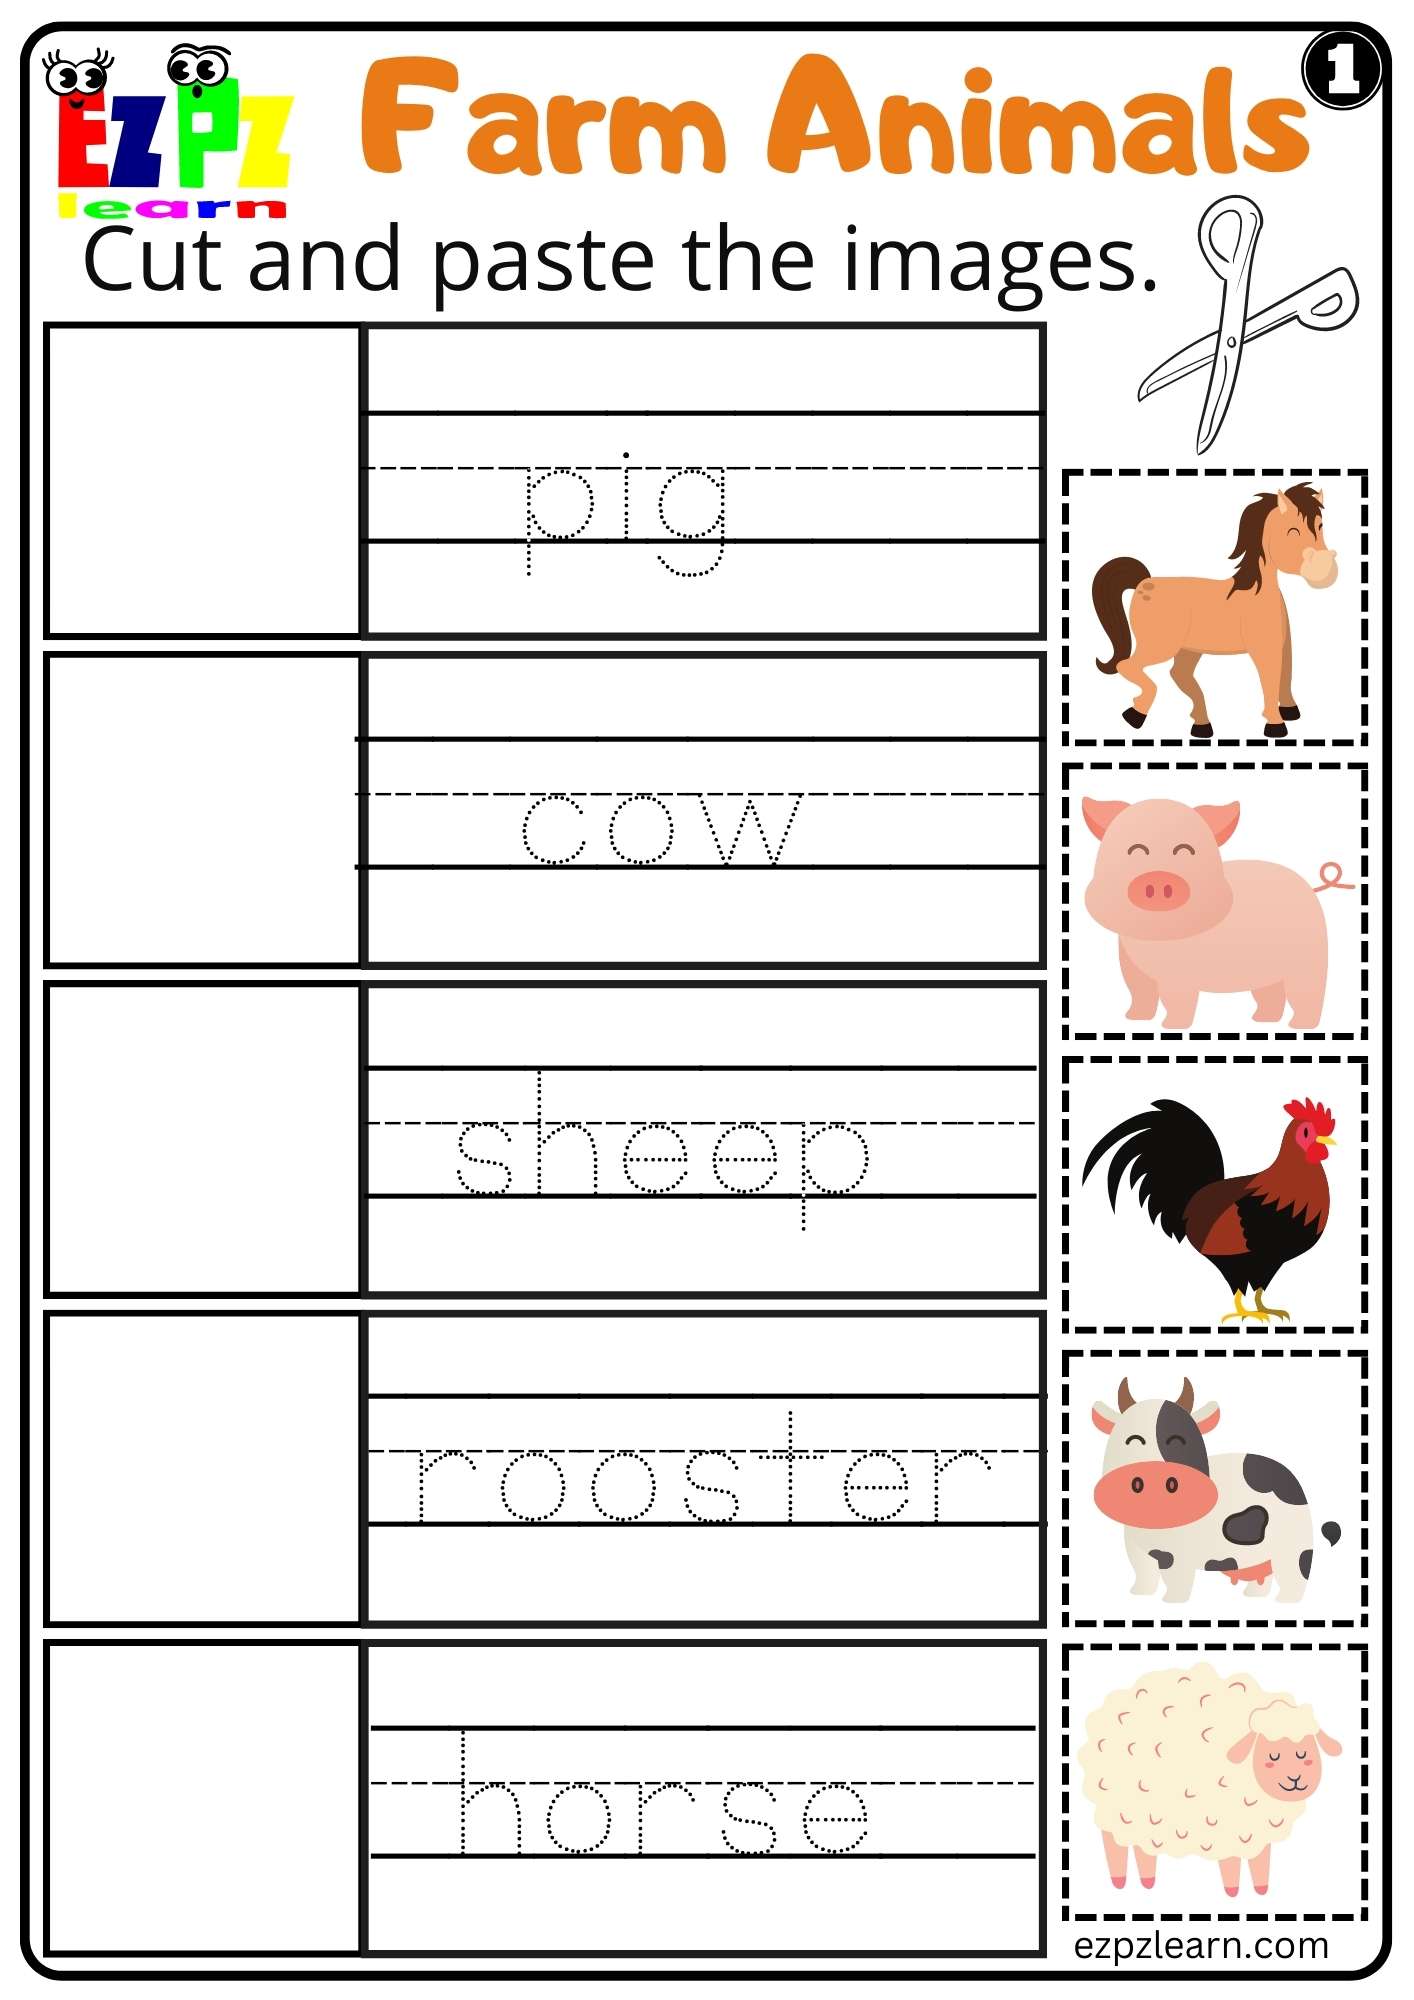 farm-animals-cut-and-paste-worksheet-for-kidergarten-or-esl-students